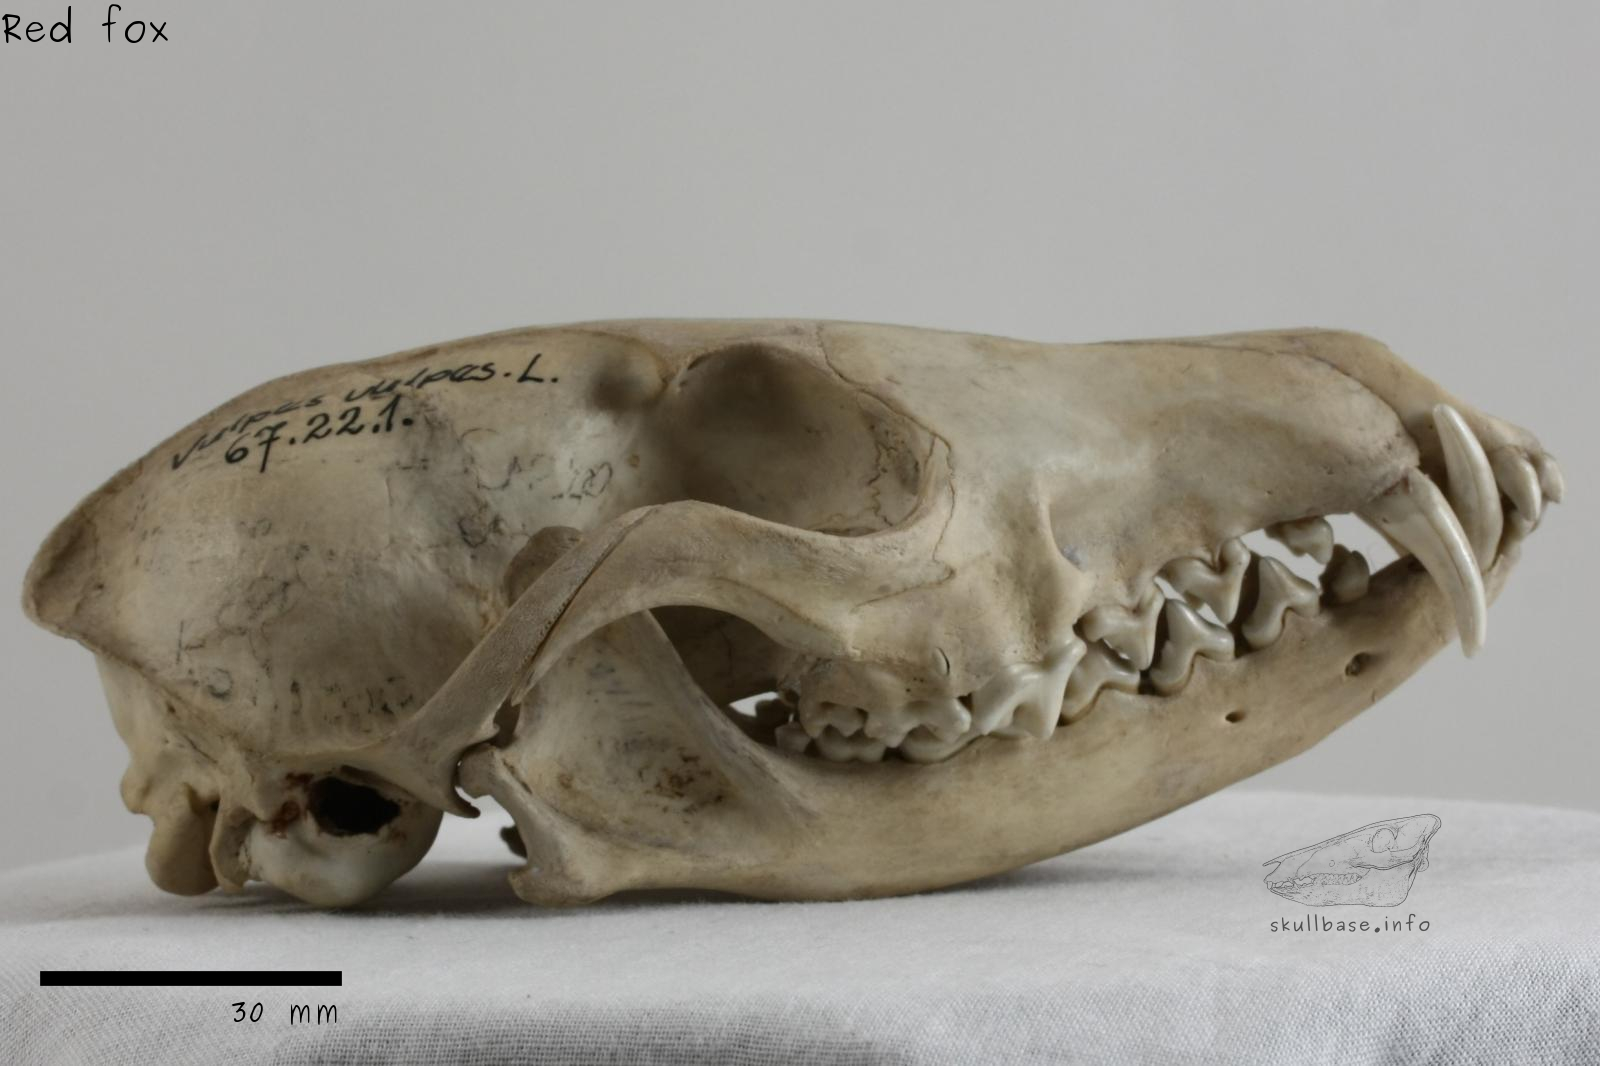 Red fox (Vulpes vulpes) skull lateral view